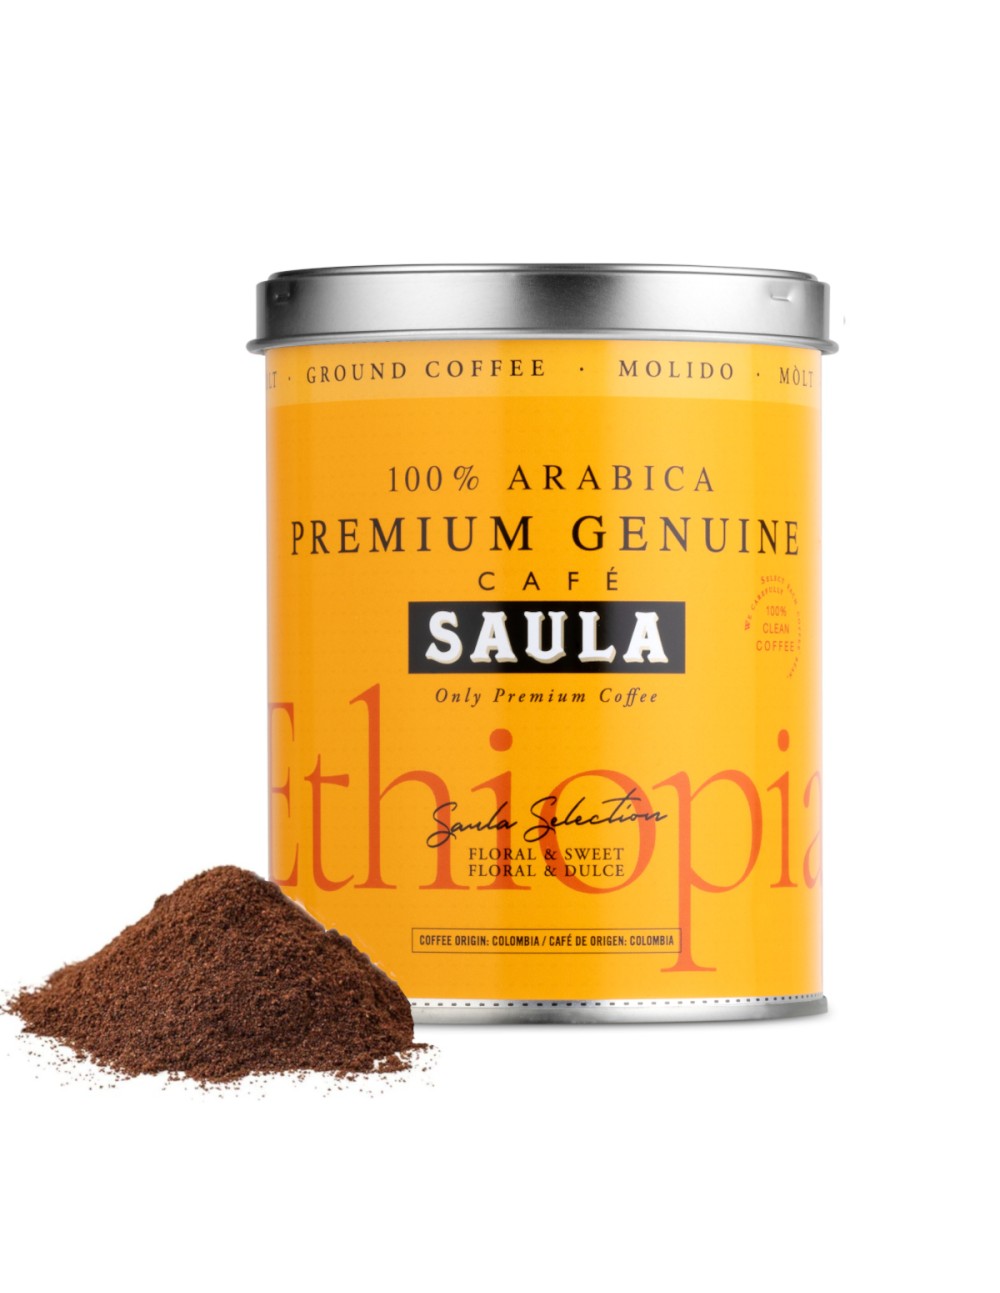 Premium GENUINE ETHIOPIA Specialty Coffee Molido 250g.